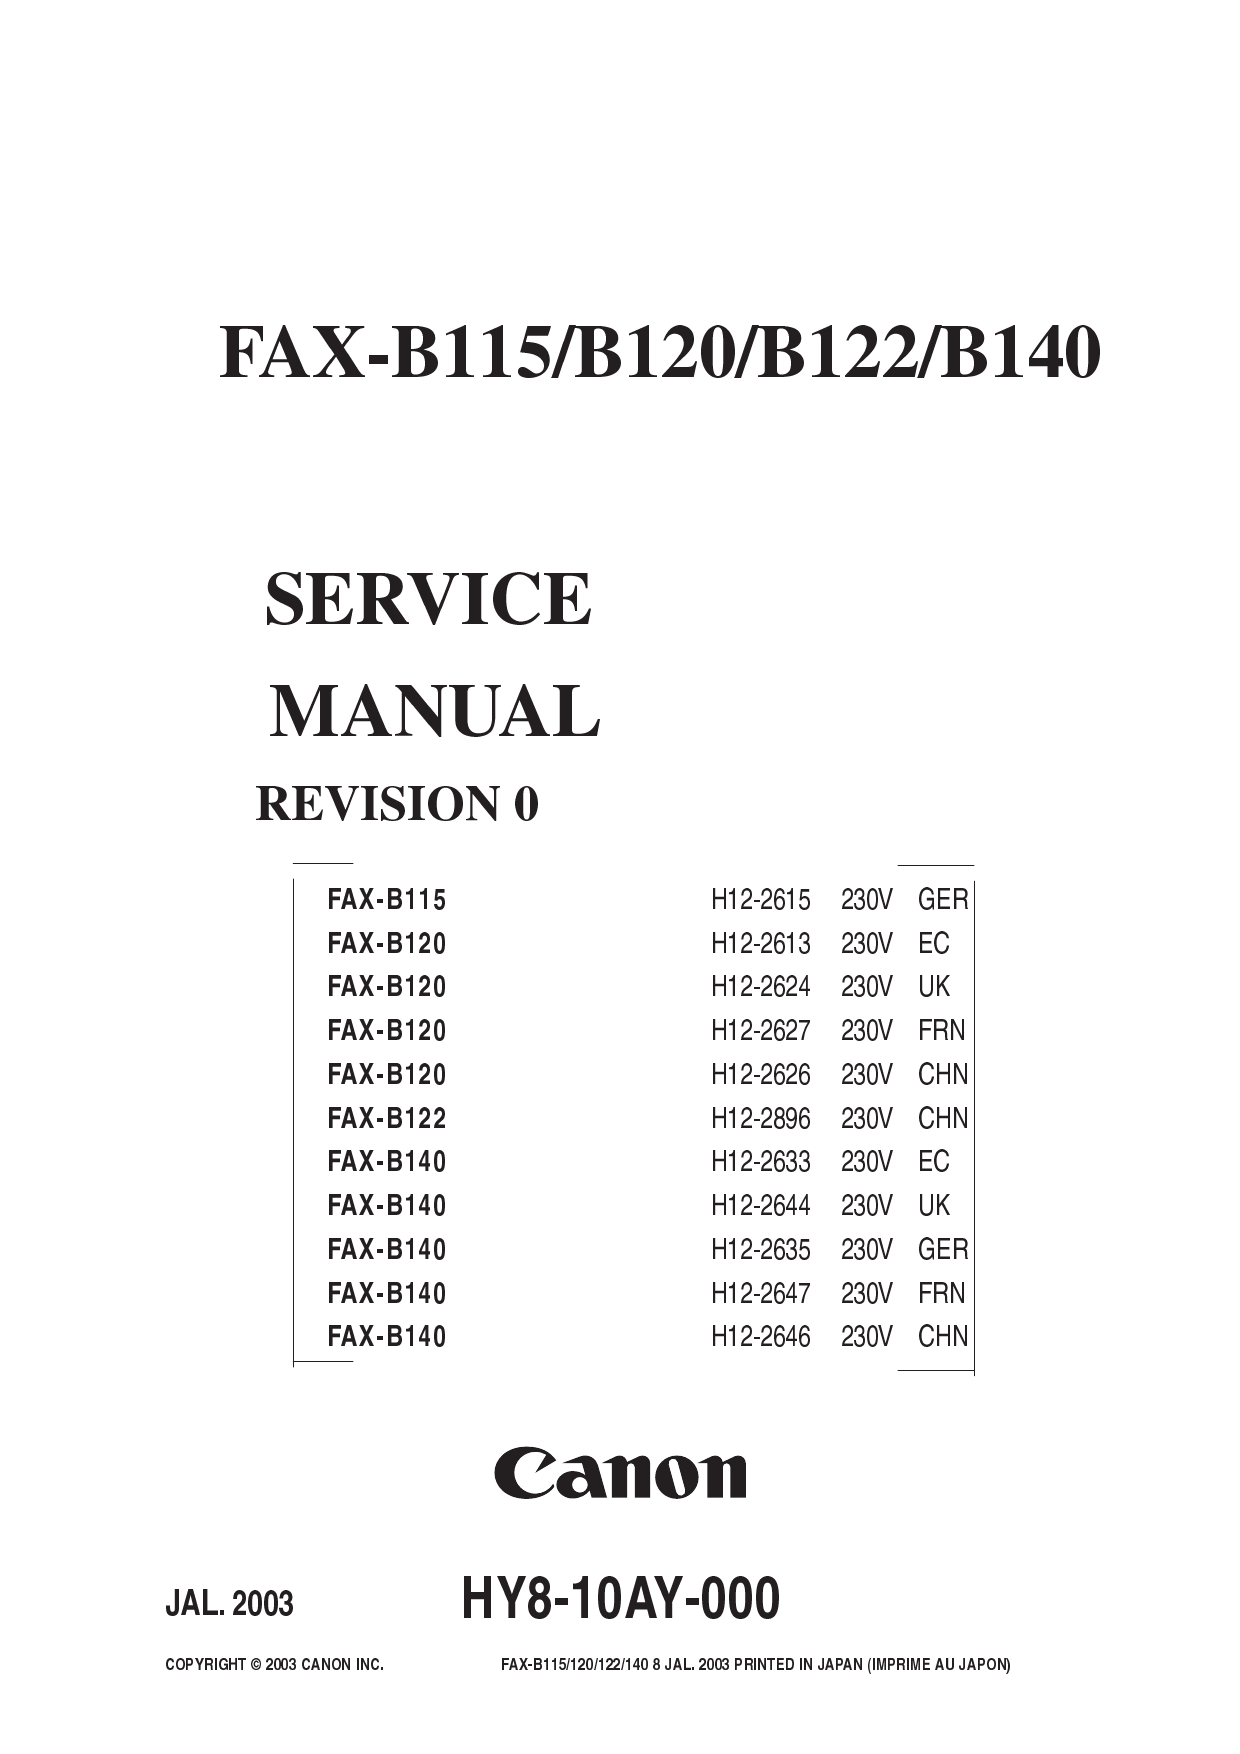 Canon FAX B115 B120 B122 B140 Service Manual-1